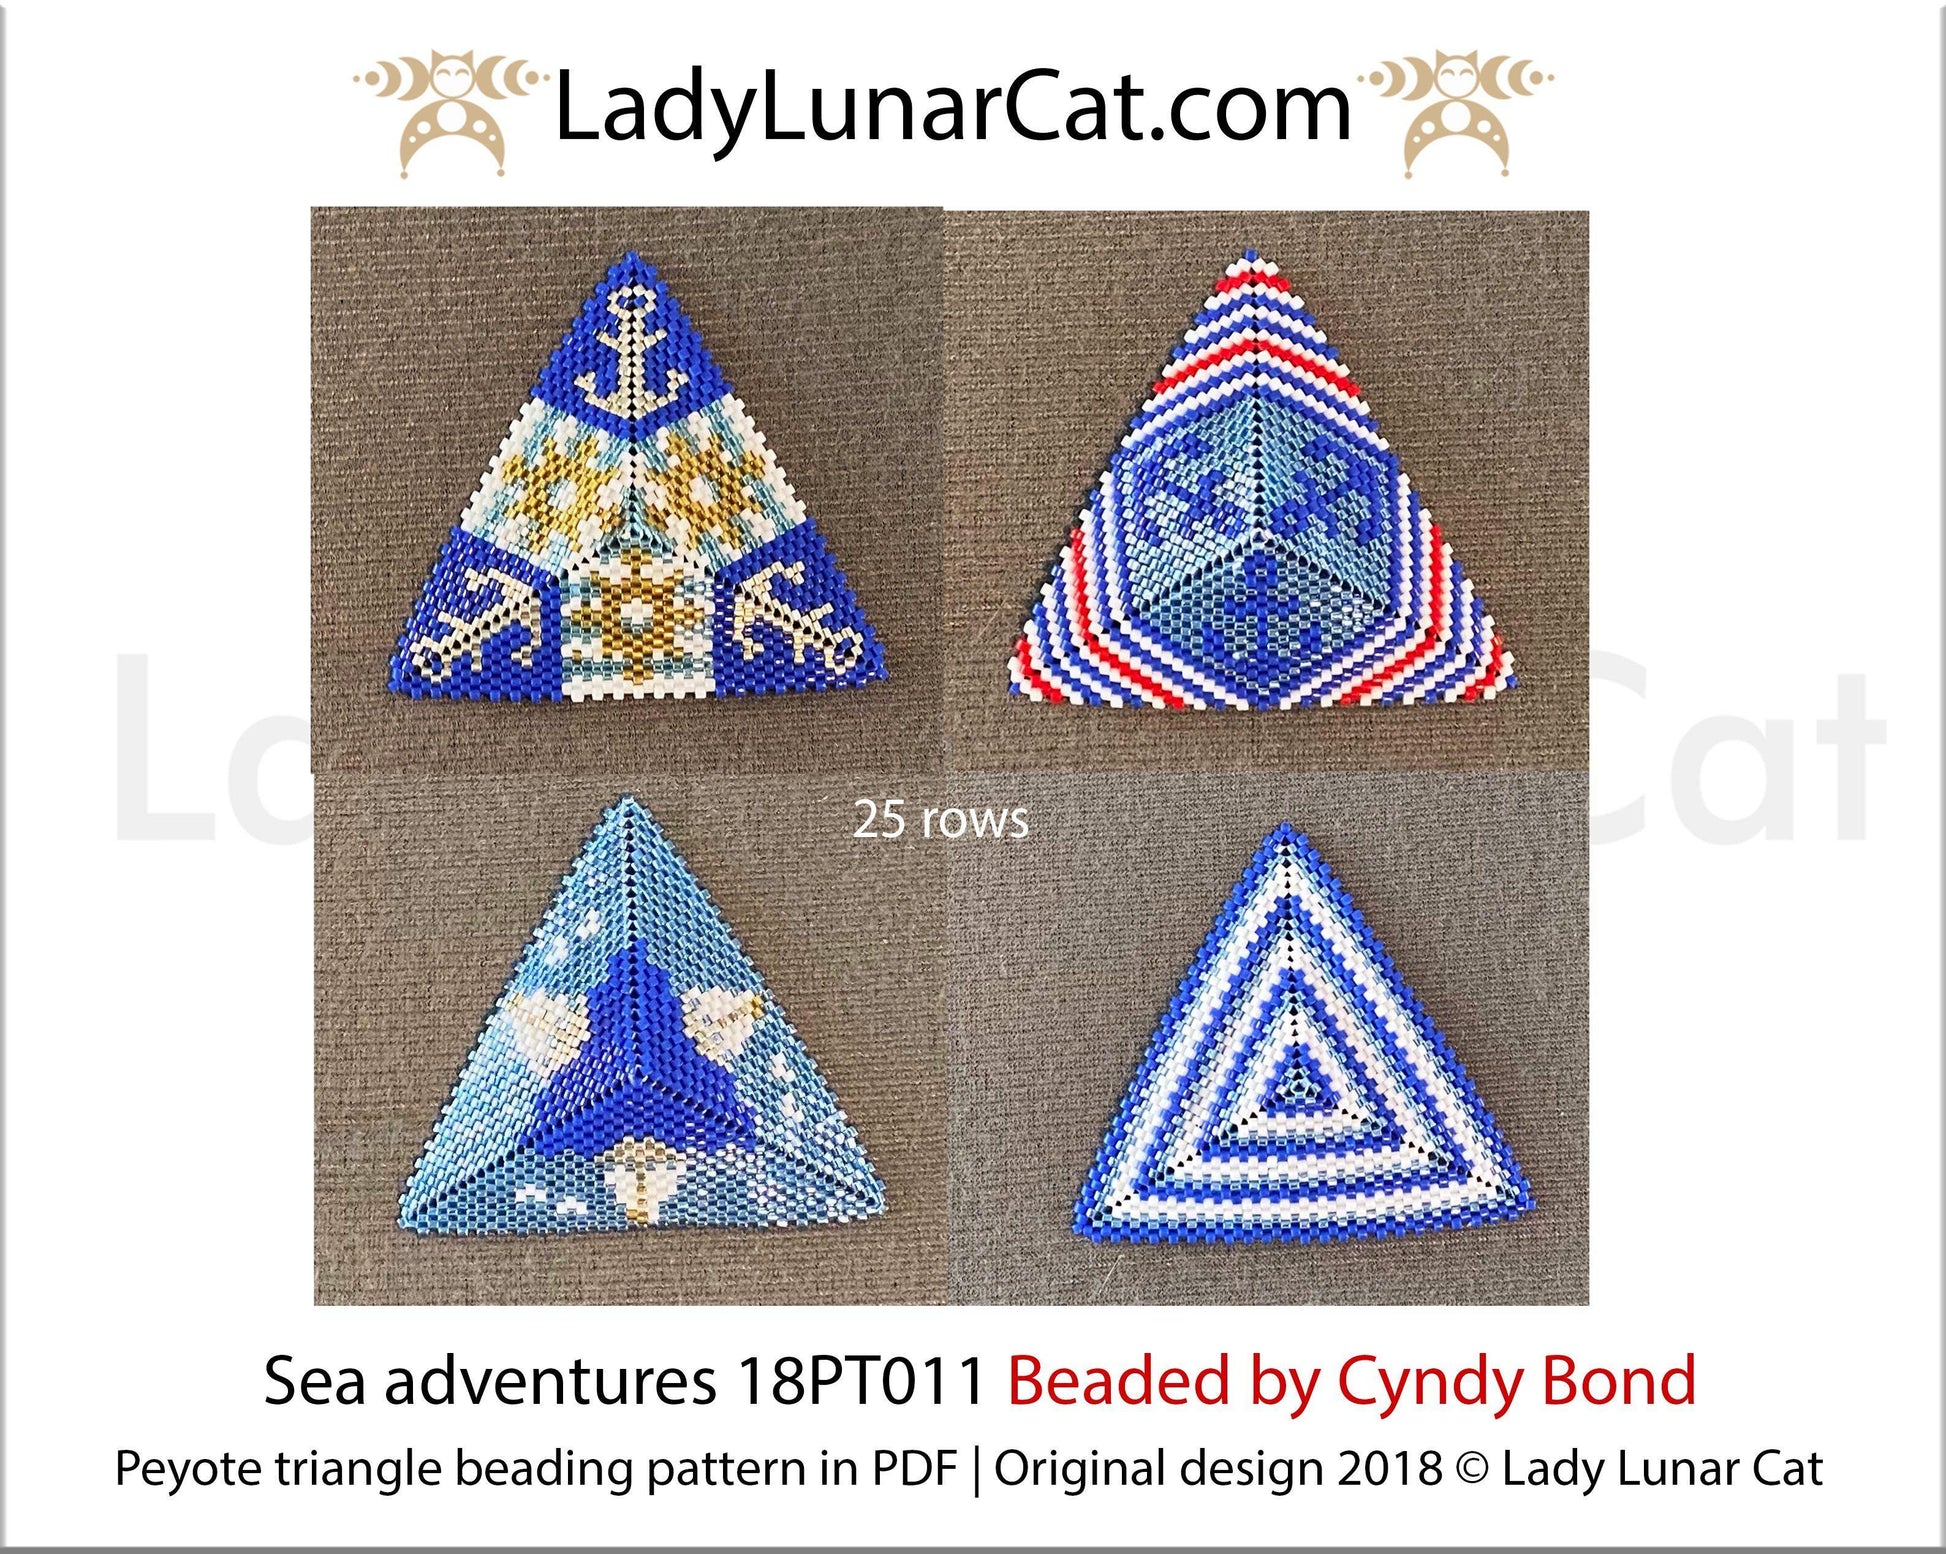 Peyote triangle pattern Sea adventures 18PT011 LadyLunarCat